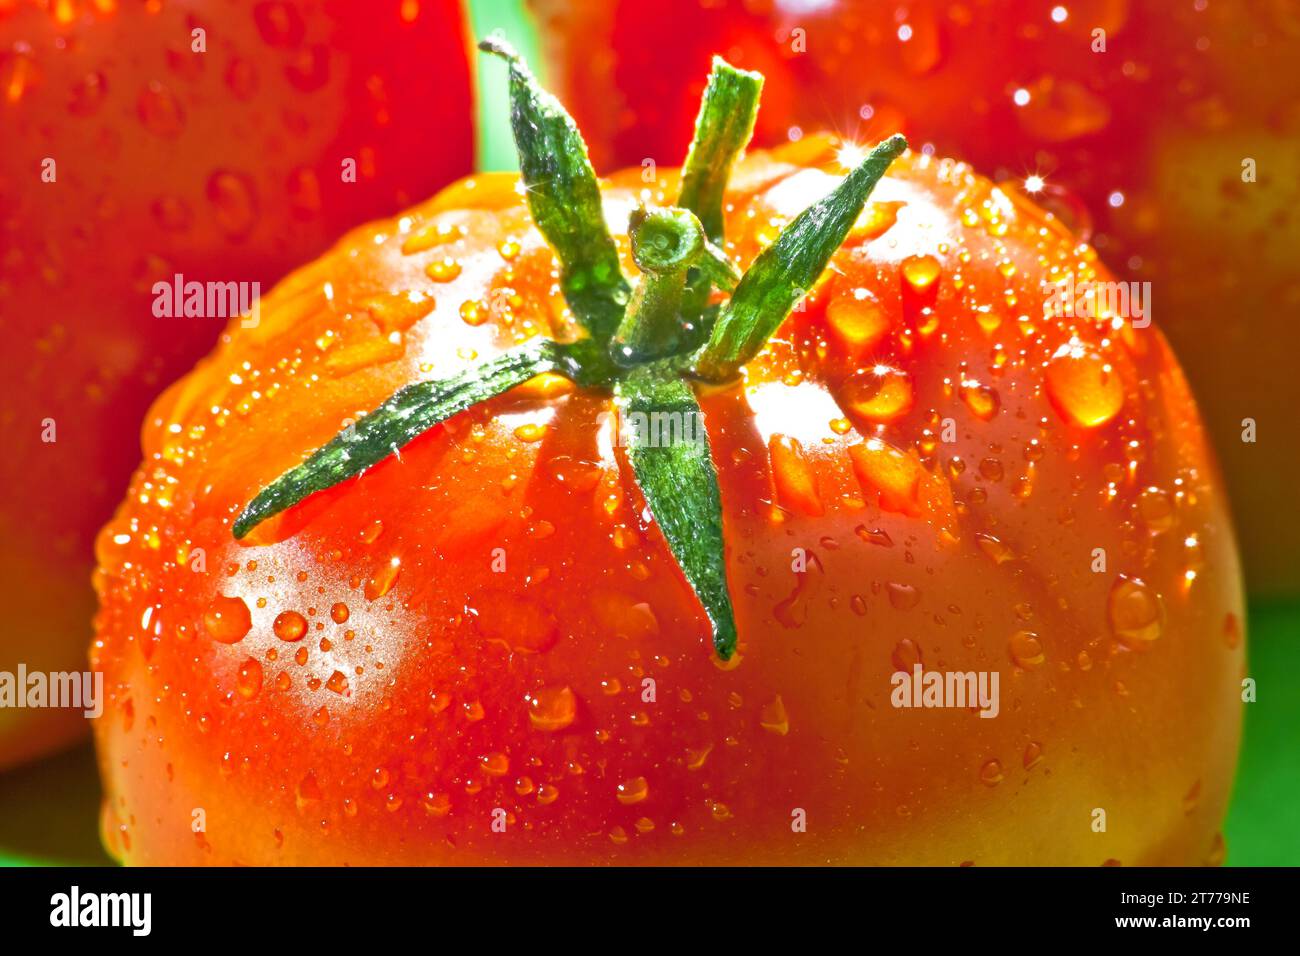 detail of fresh red tomato Stock Photo